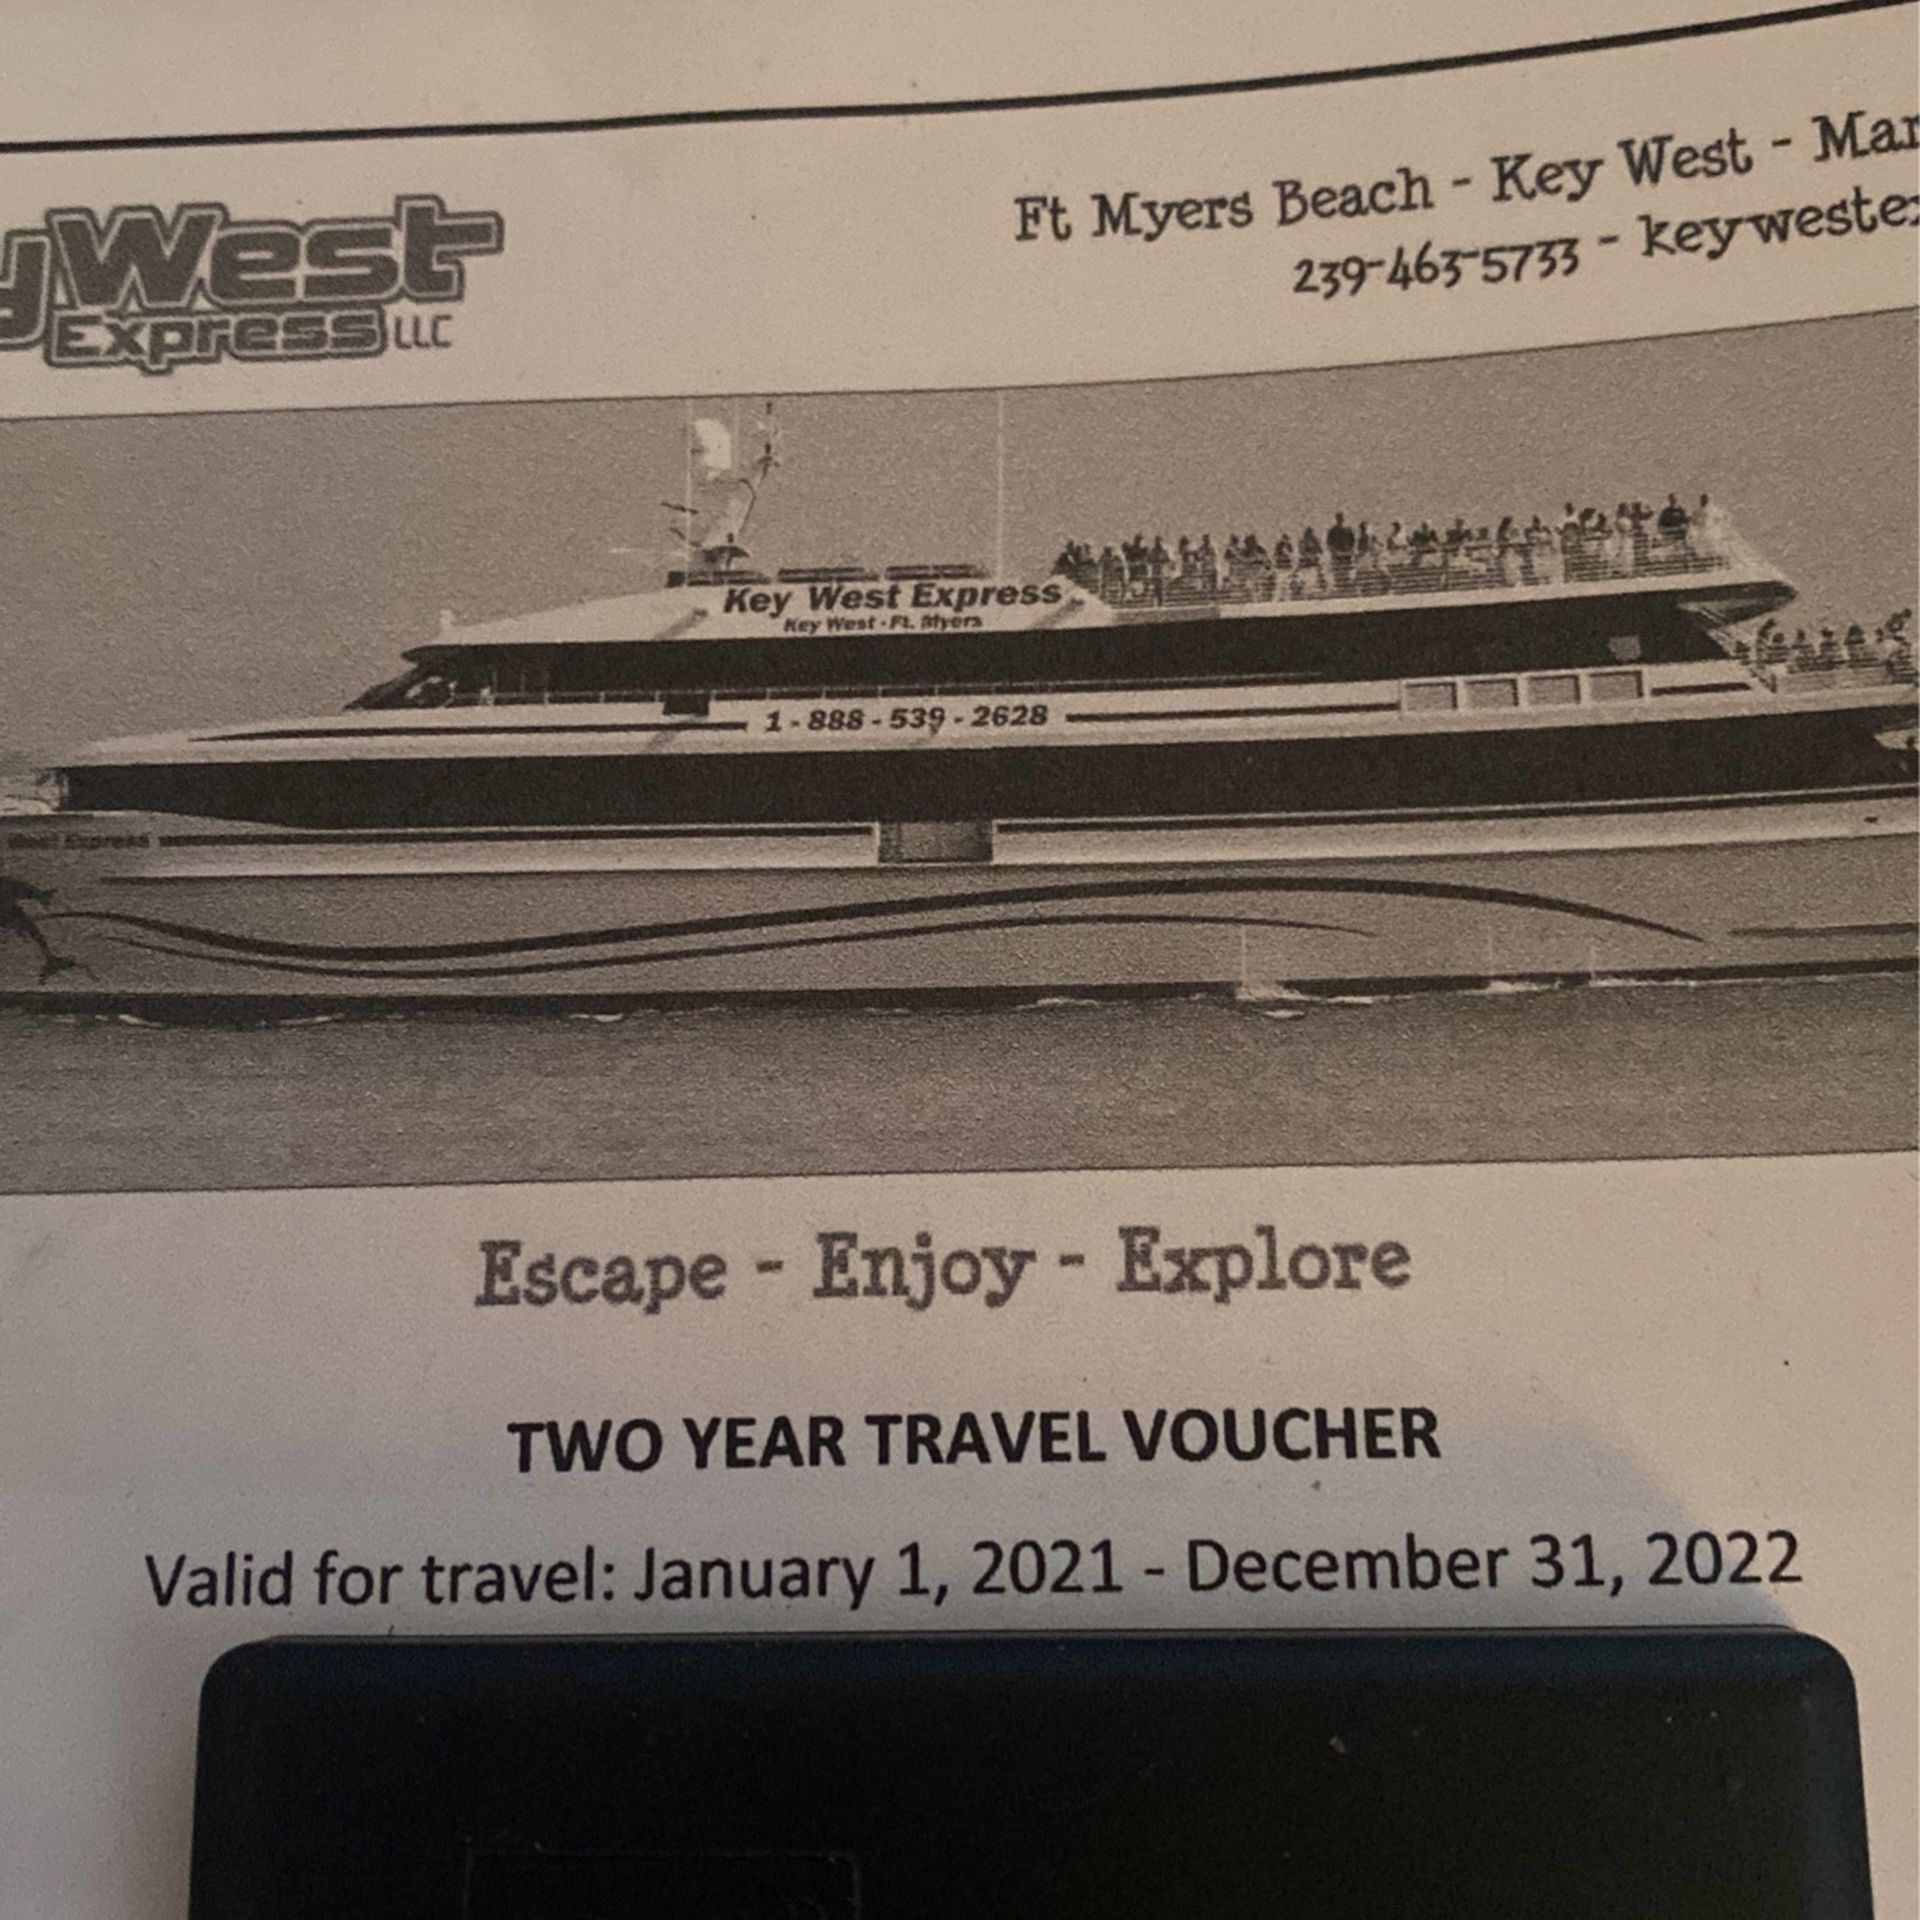 Travel Vouchers To Key West 